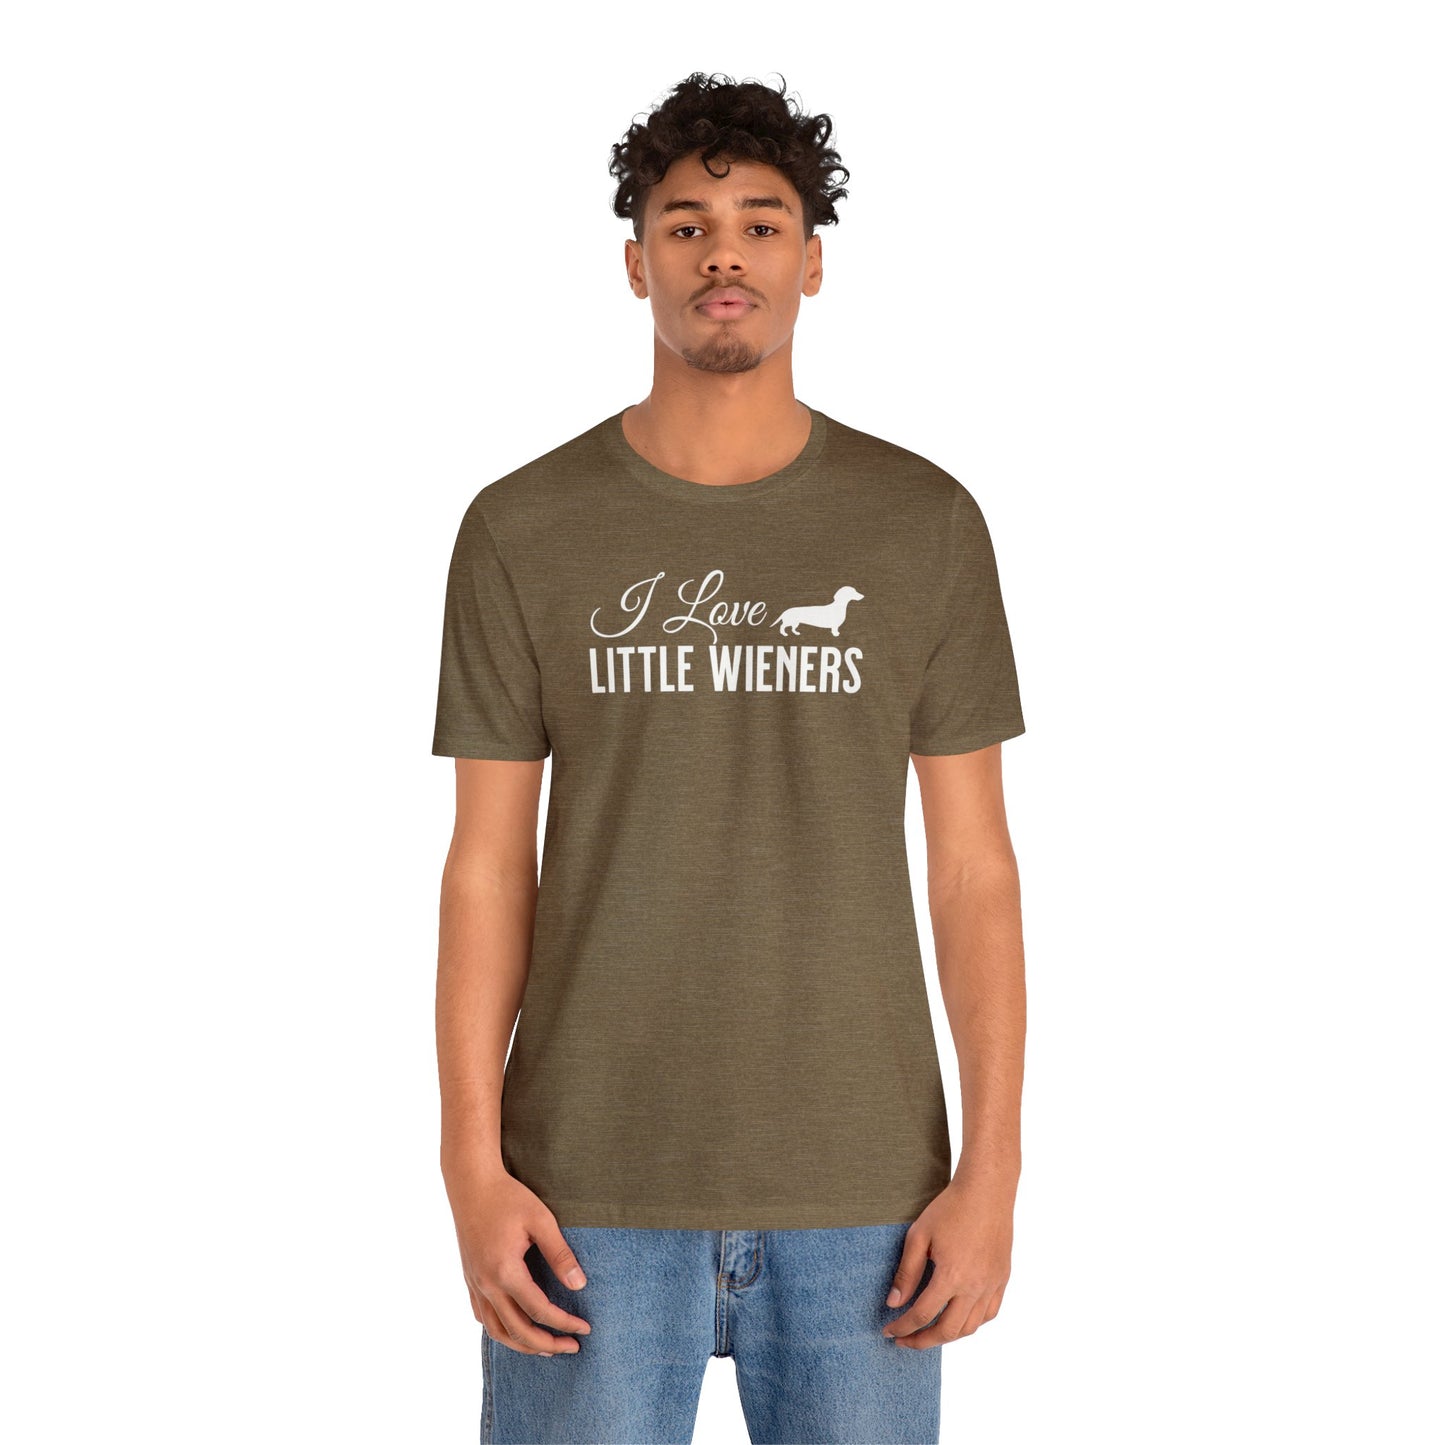 Dachshund Shirt - I Love Little Wieners Shirt